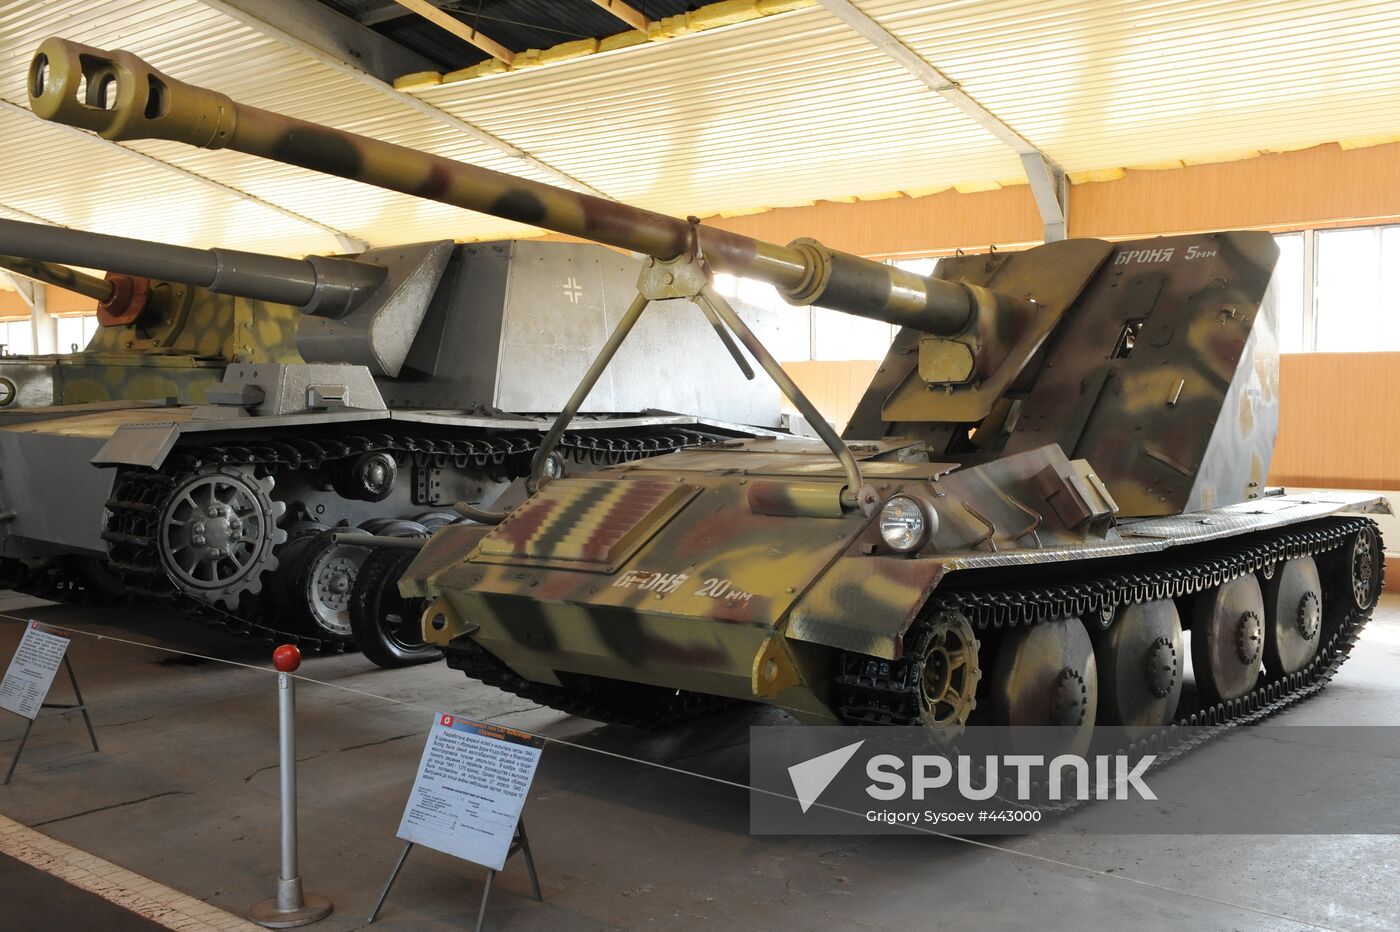 Kubinka armor museum